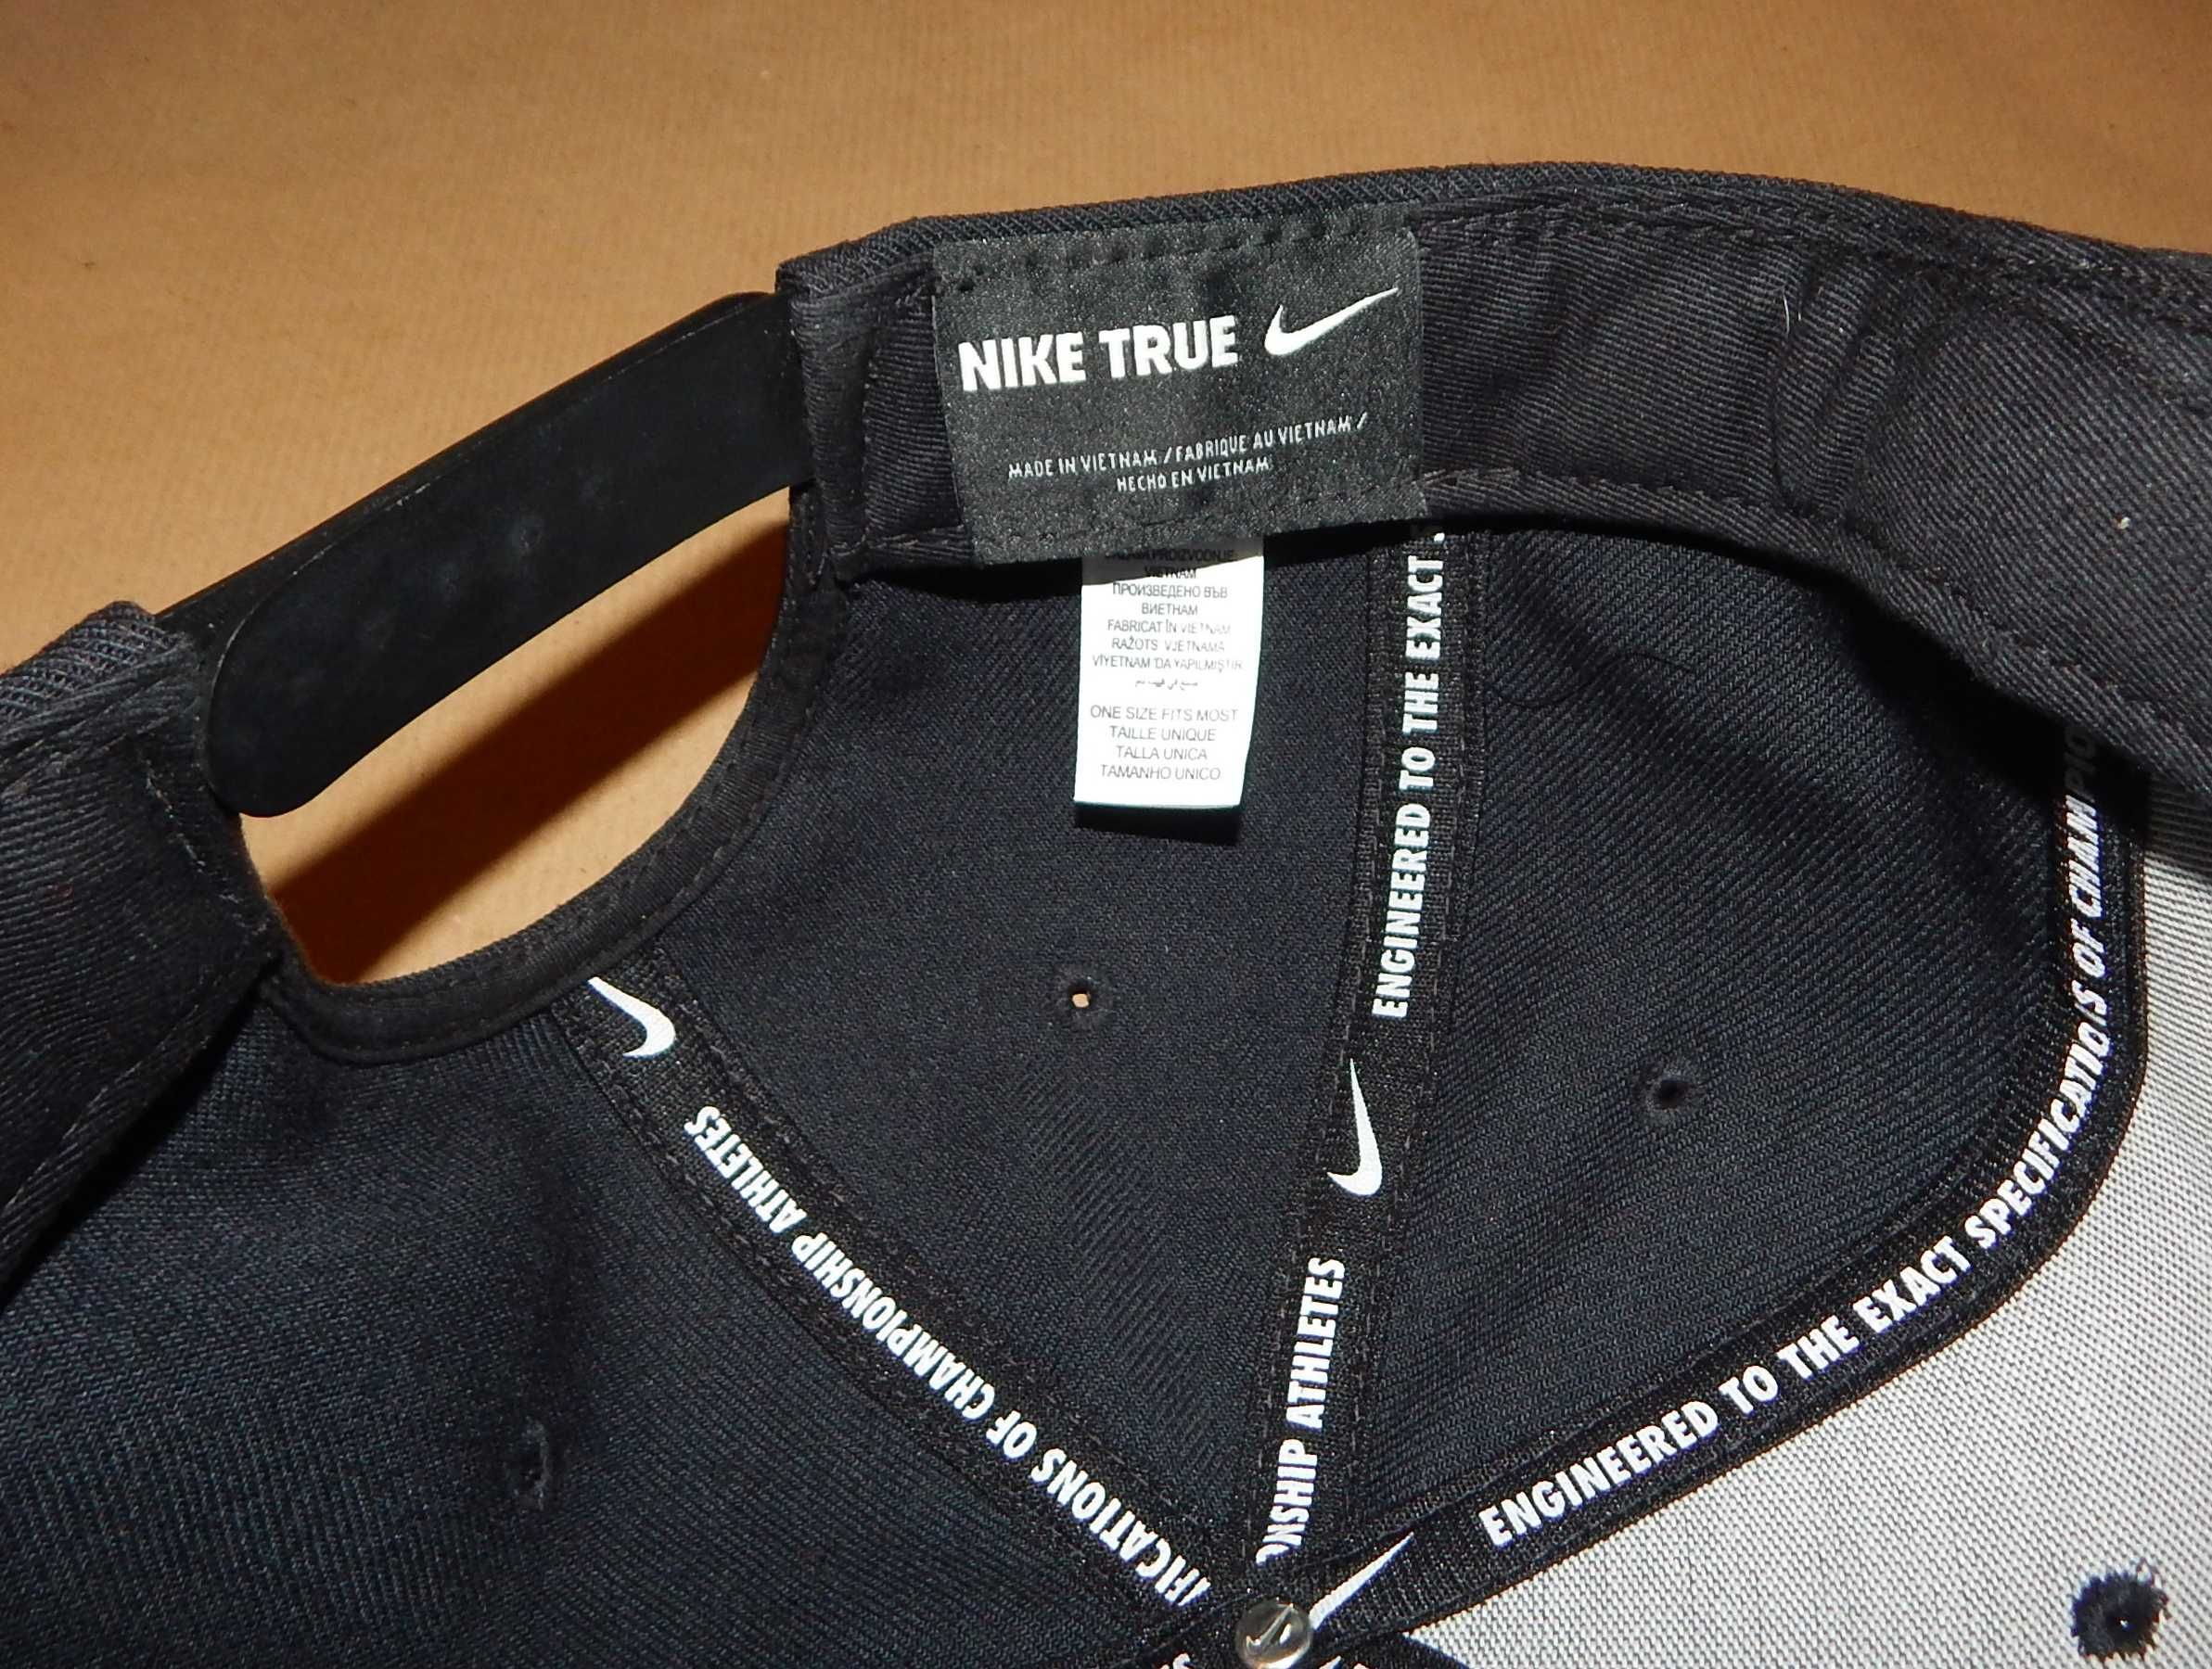 Sapca Nike Air True, unisex, din lana, noua fara eticheta